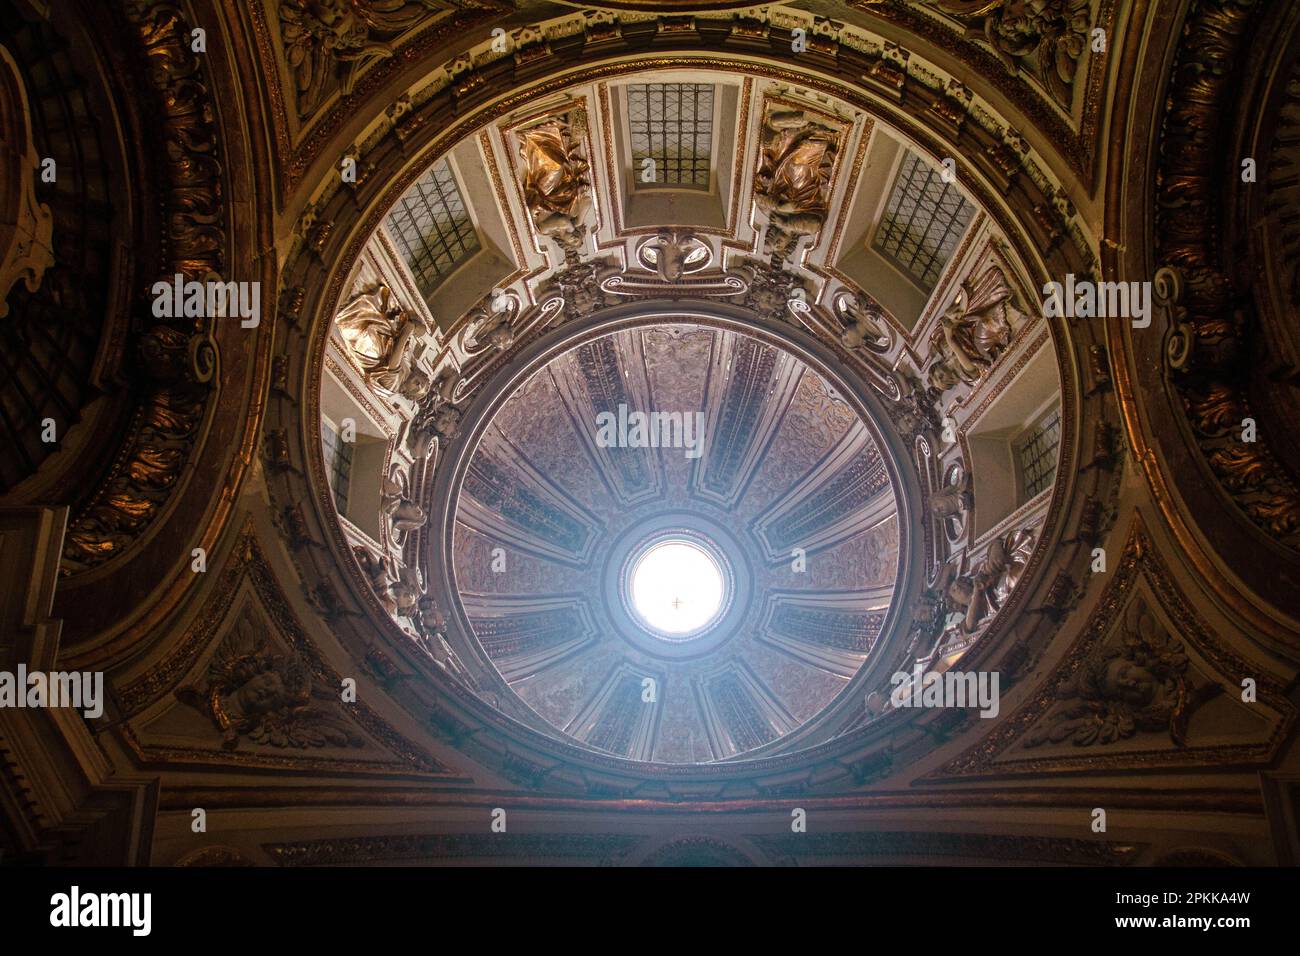 Dome of the vault in Santa Teresa degli Scalzi,  church in the historic center of Naples, Italy Stock Photo